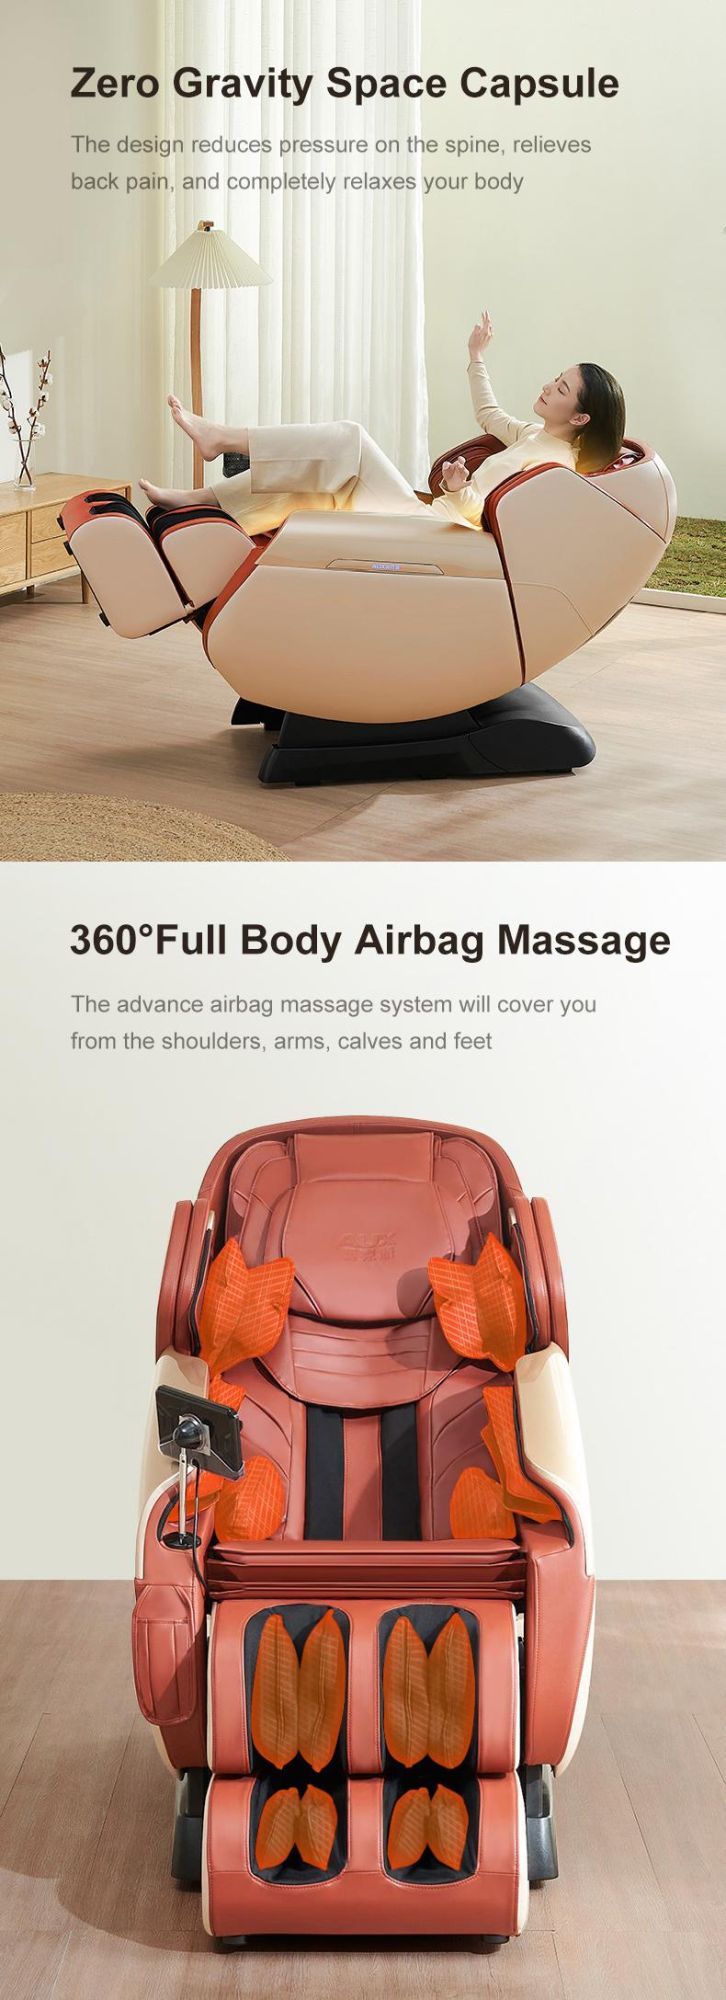 Amazon Best Sell Kursi Pijat Elektrik Electric Smart SL Mechanism Massage Chair 3D Zero Gravity Massage Chair 4D with Touch Screen